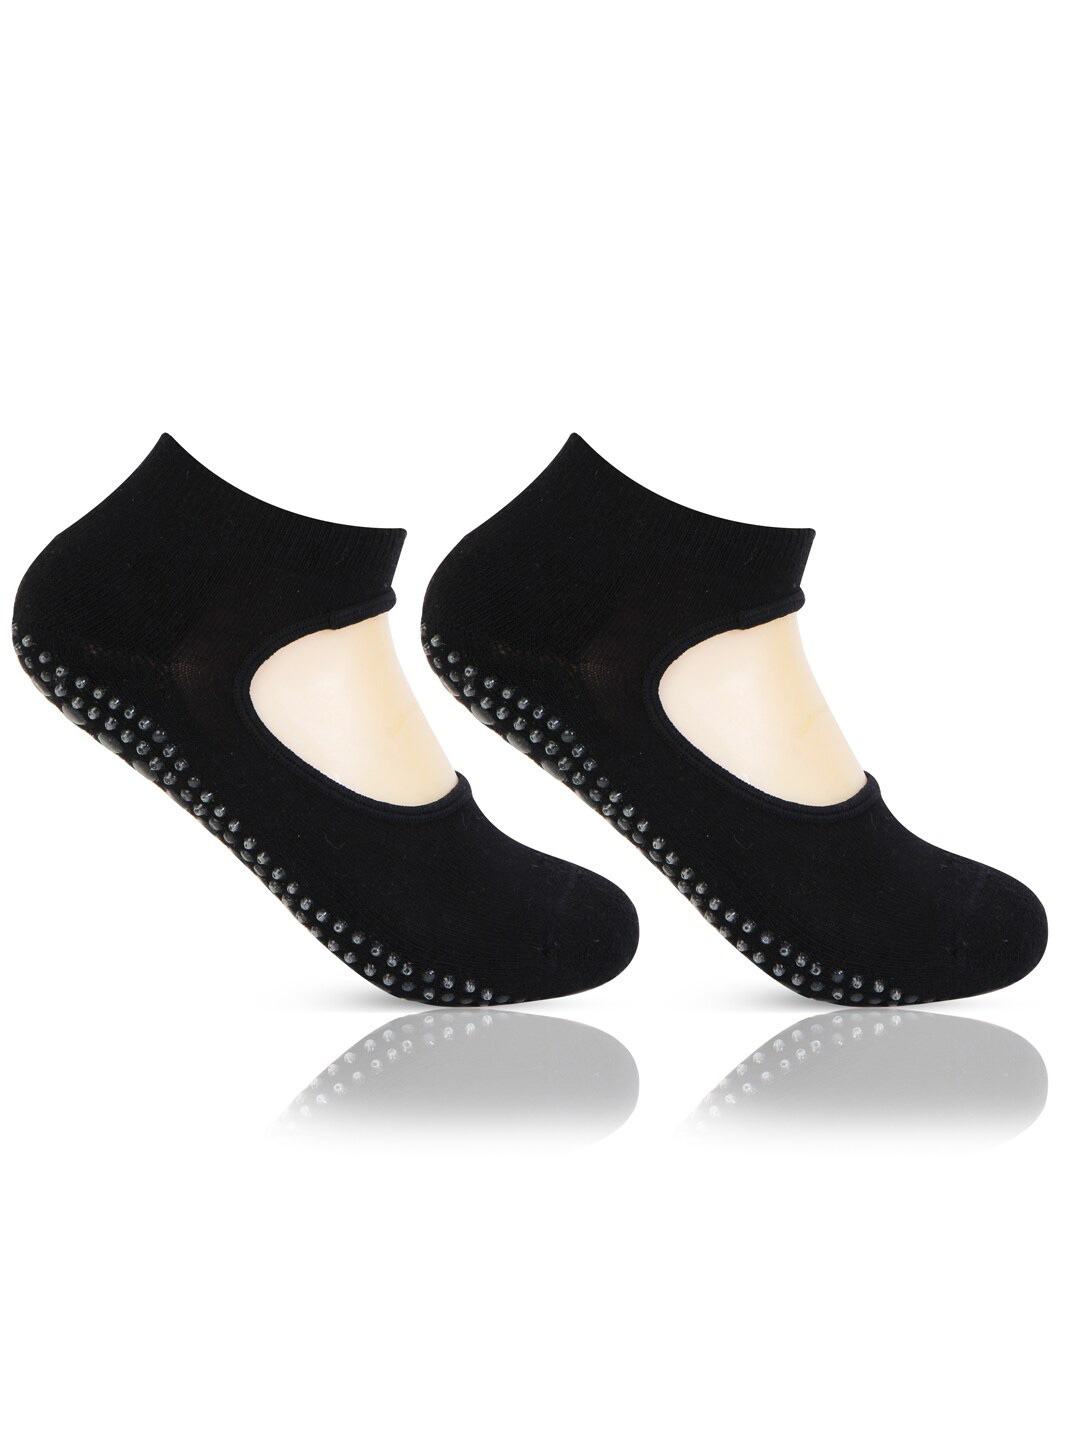 Accessories Socks | Bonjour Women Black Solid Anti-Skid Yoga Socks - DL50539